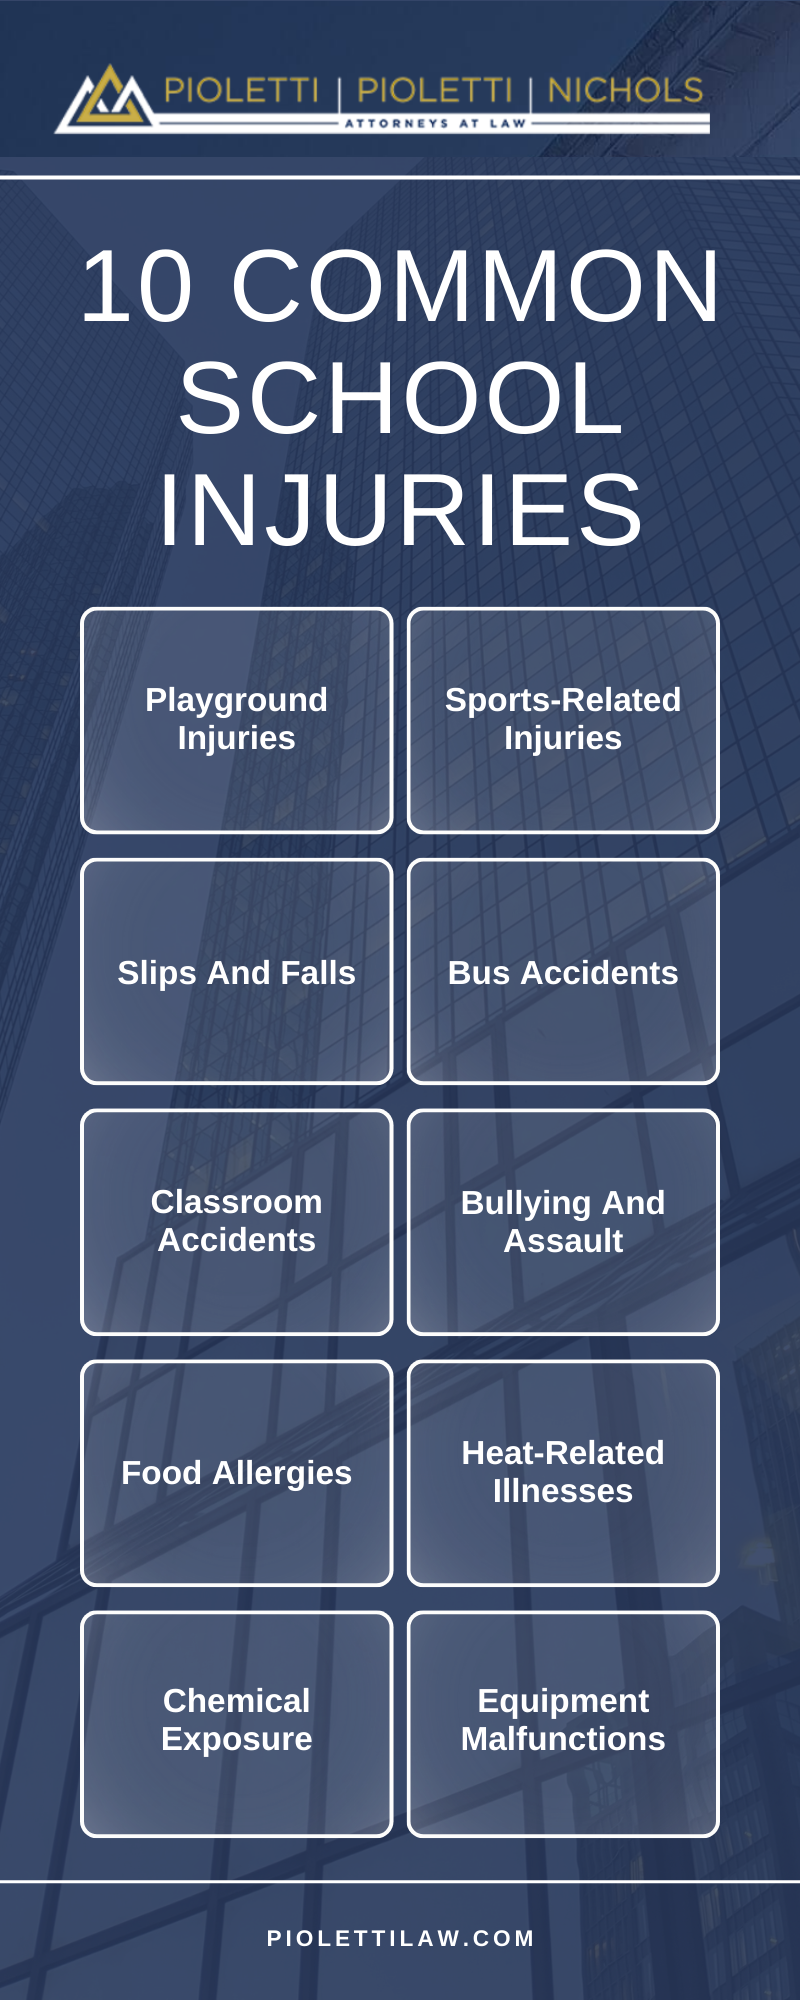 10 Common School Injuries Infographic